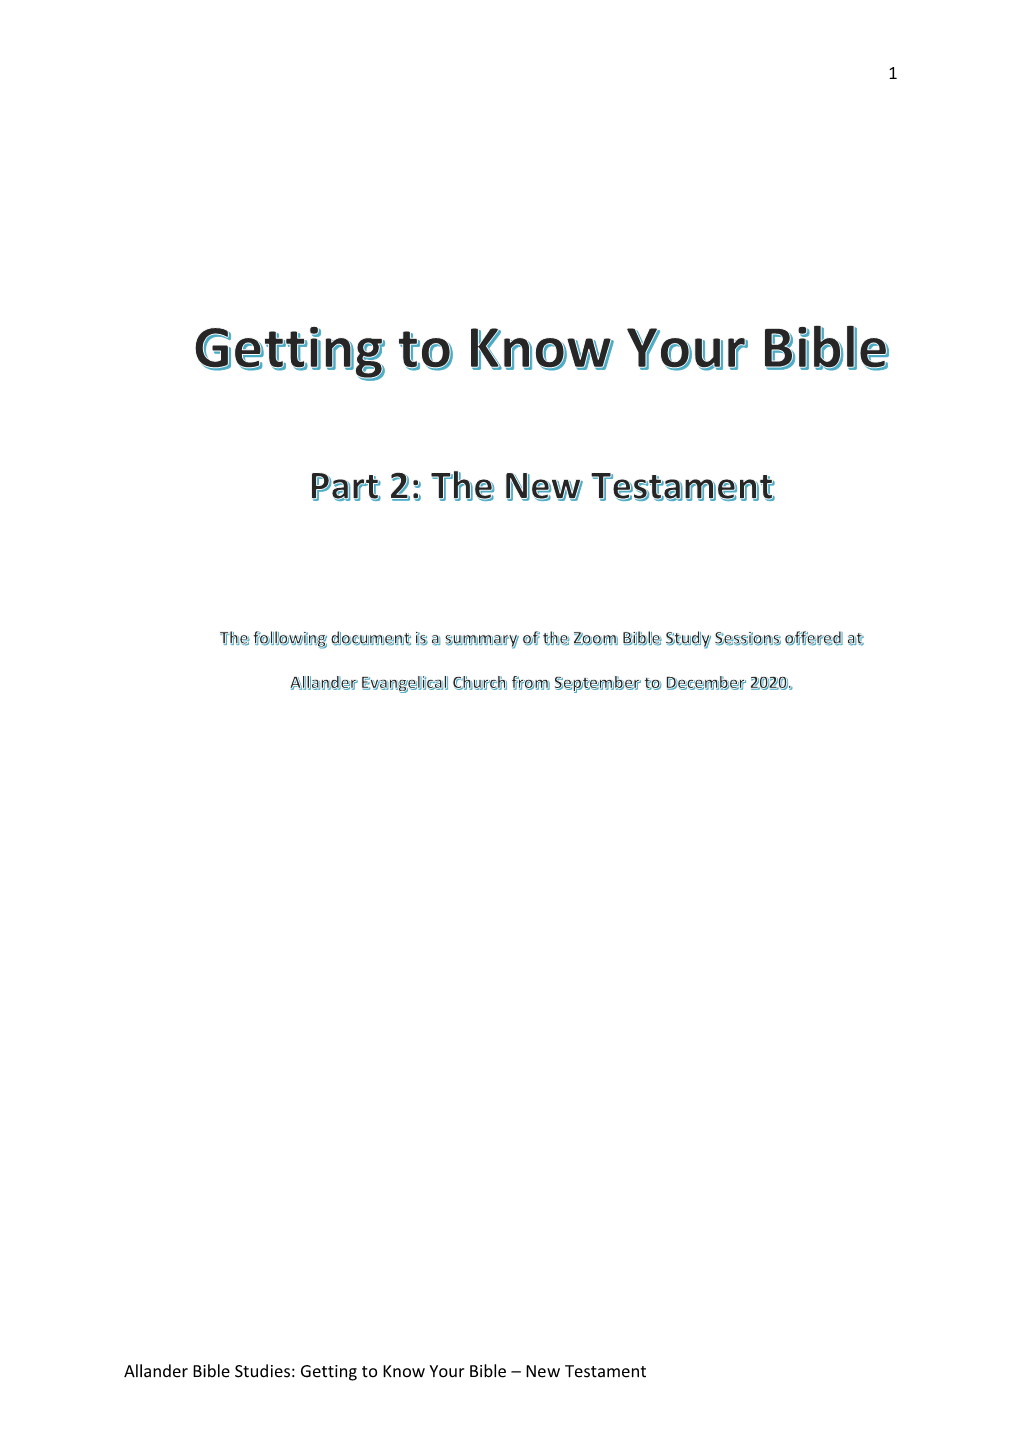 New Testament 2